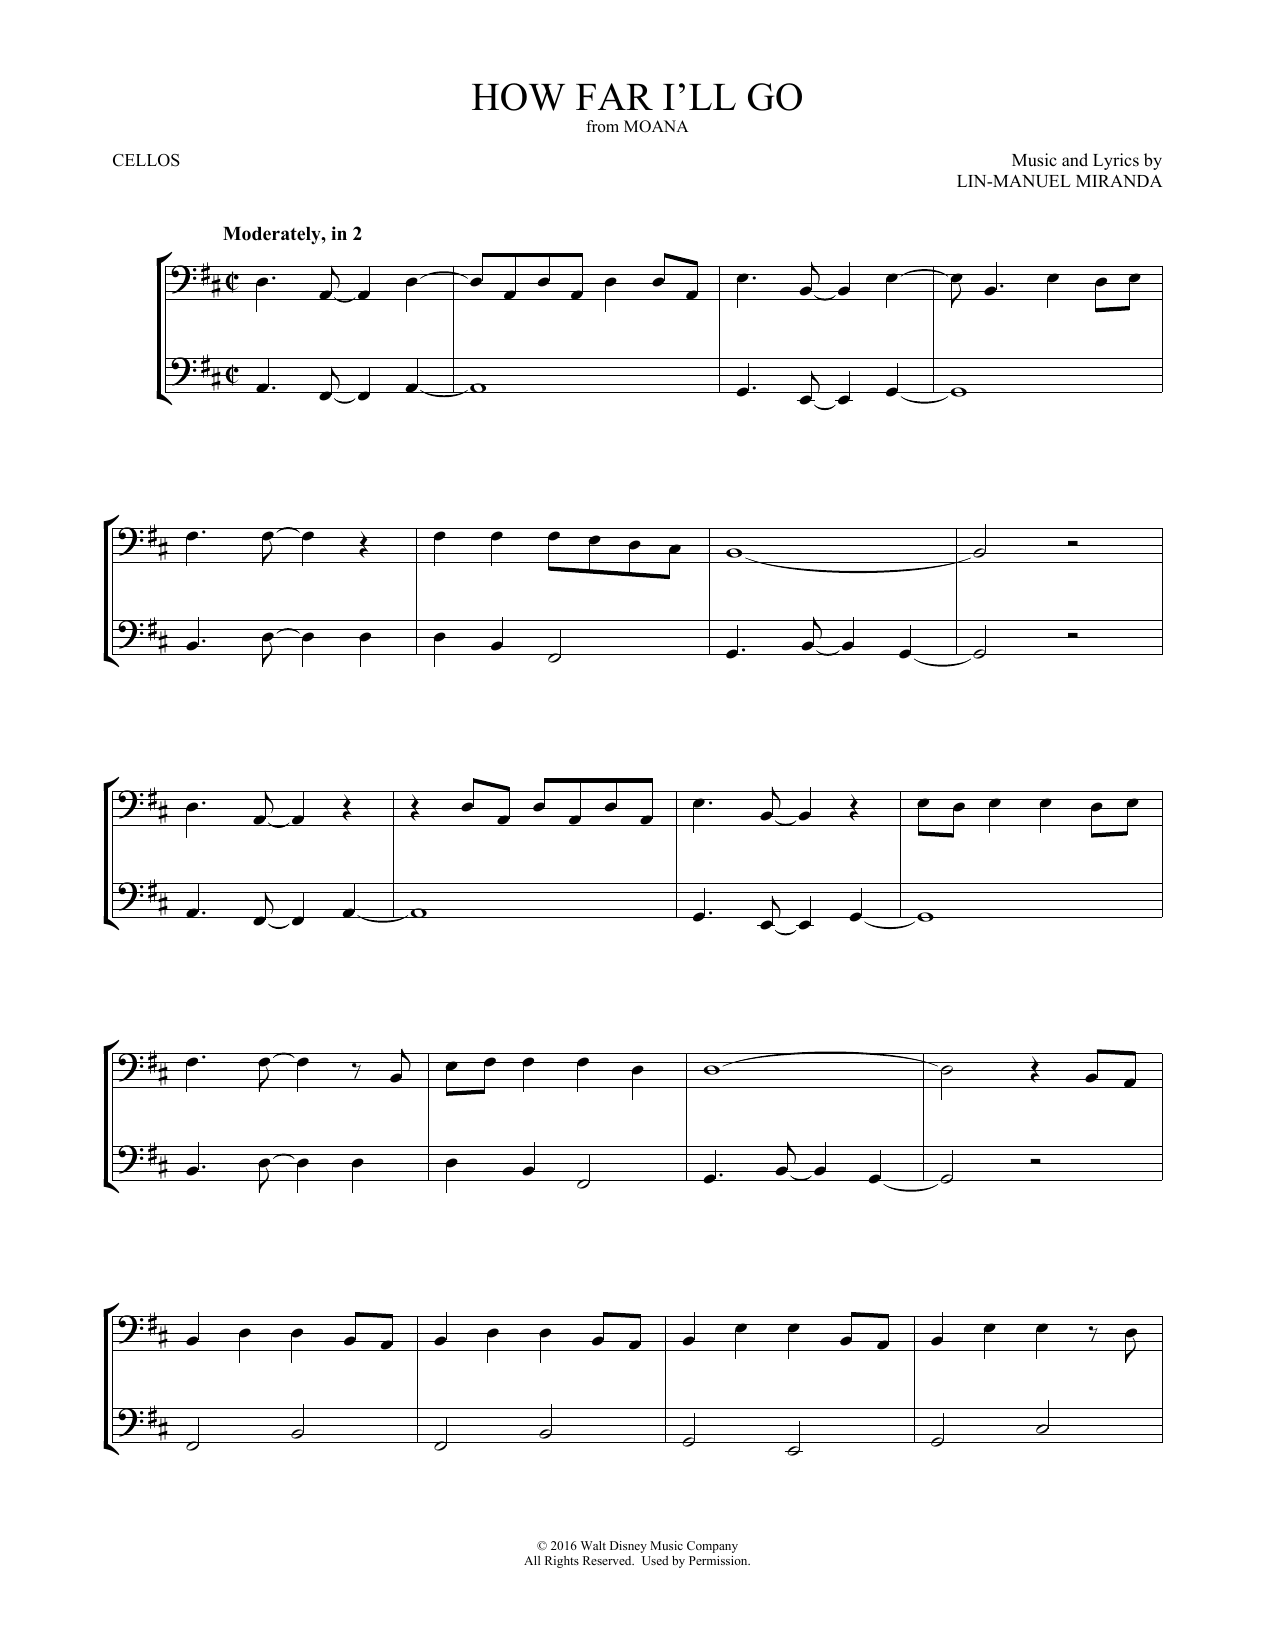 Lin-Manuel Miranda How Far I'll Go (from Moana) Sheet Music Notes & Chords for Clarinet Duet - Download or Print PDF